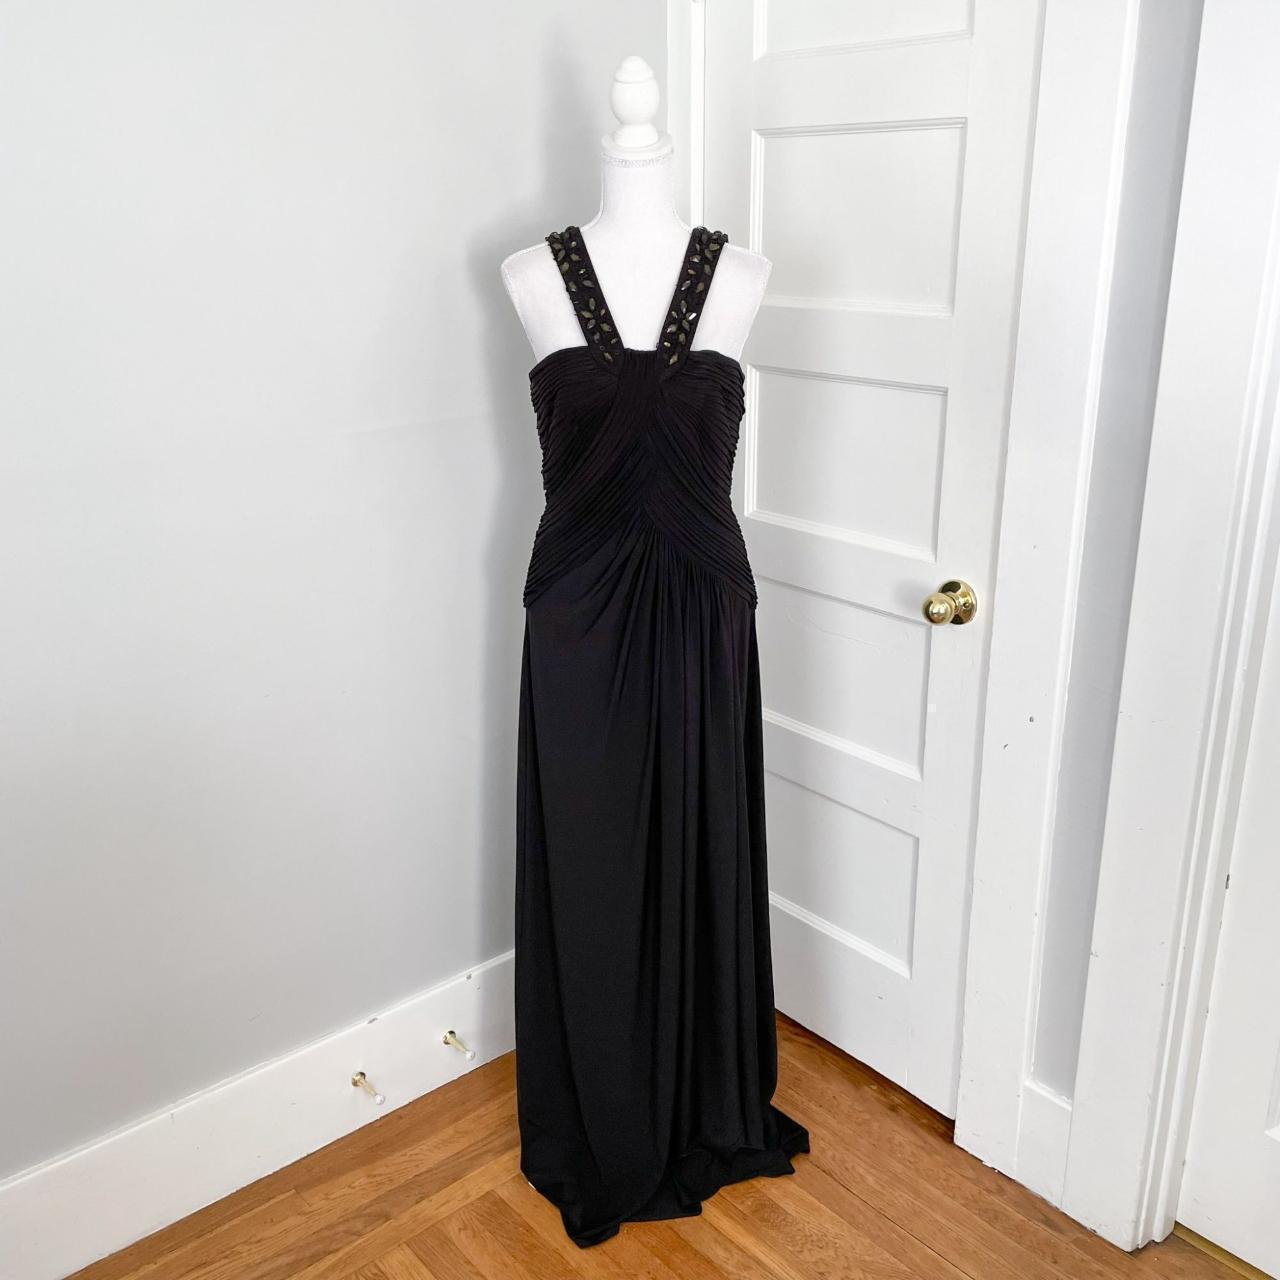 Primavera Couture 3919 - Beaded Fringed V-Neck Prom Dress | Perriwinkle | 14 